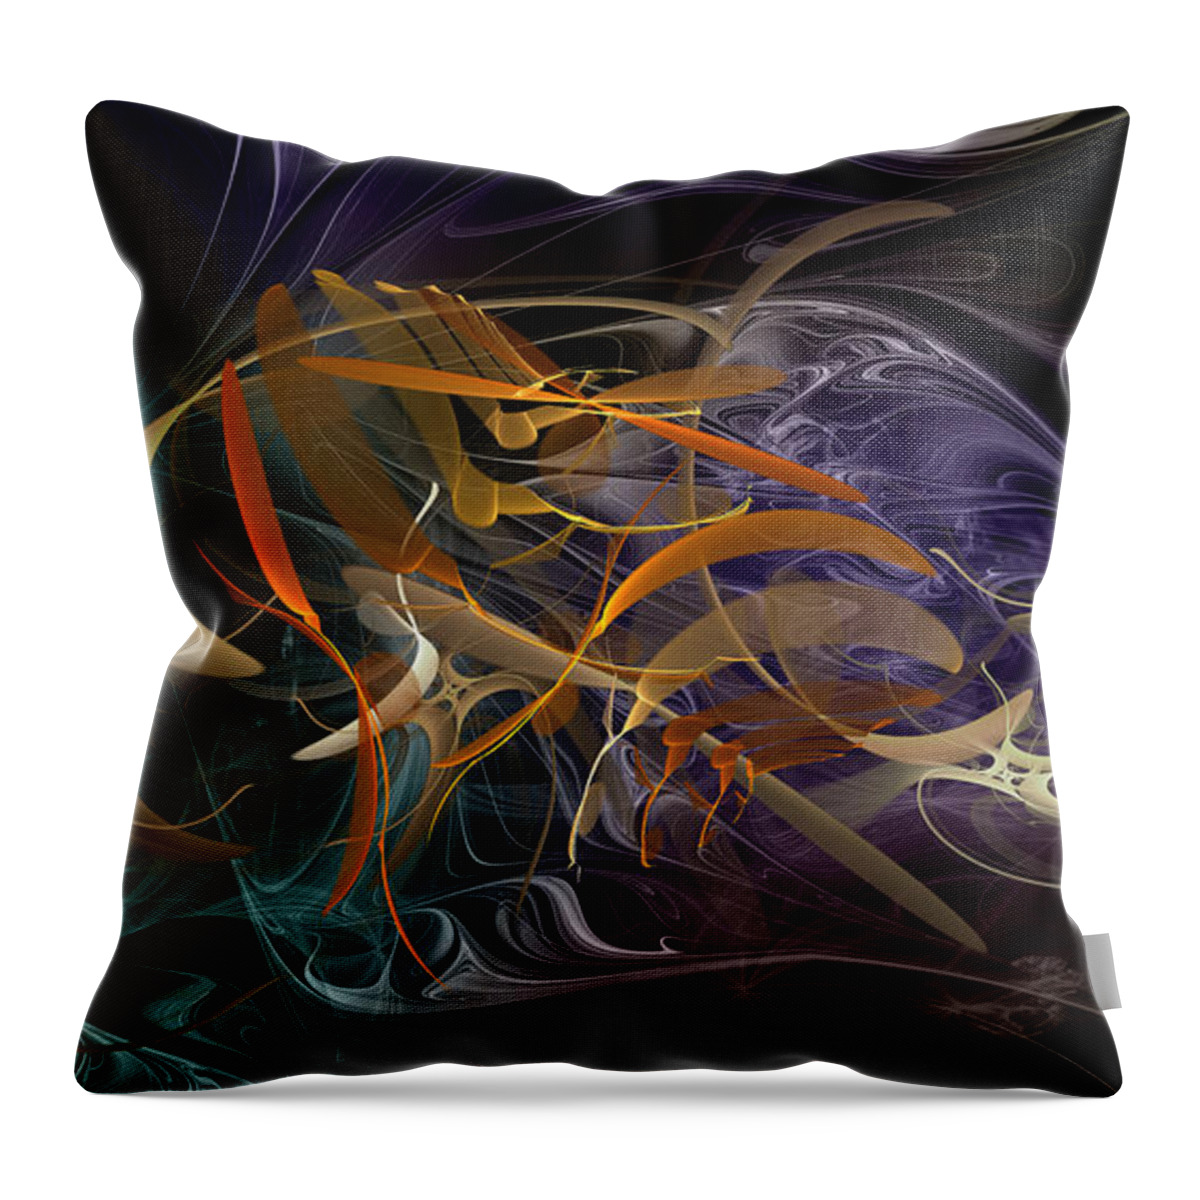 Abstract Throw Pillow featuring the digital art Echo - Modern Dark Abstract Fractal Wall Art Prints by iAbstractArt